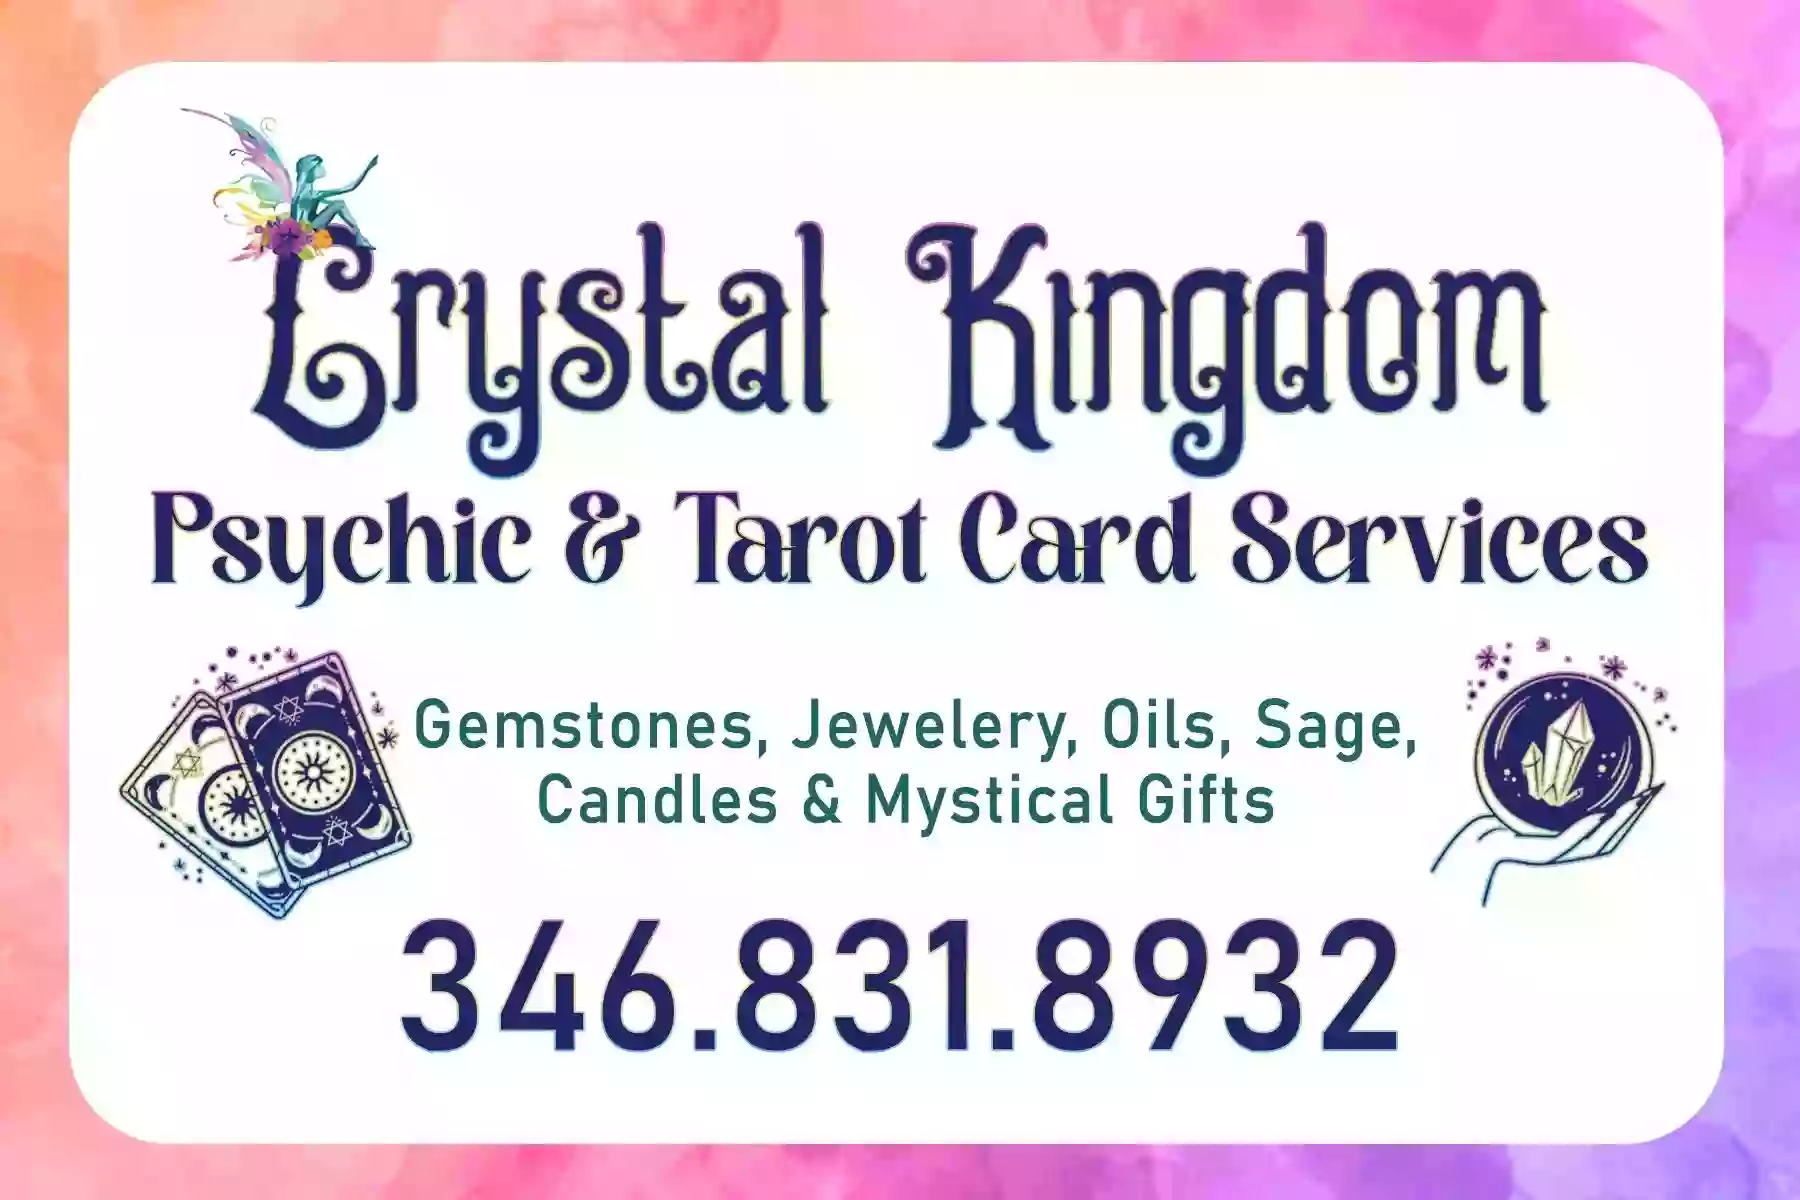 Crystal Kingdom